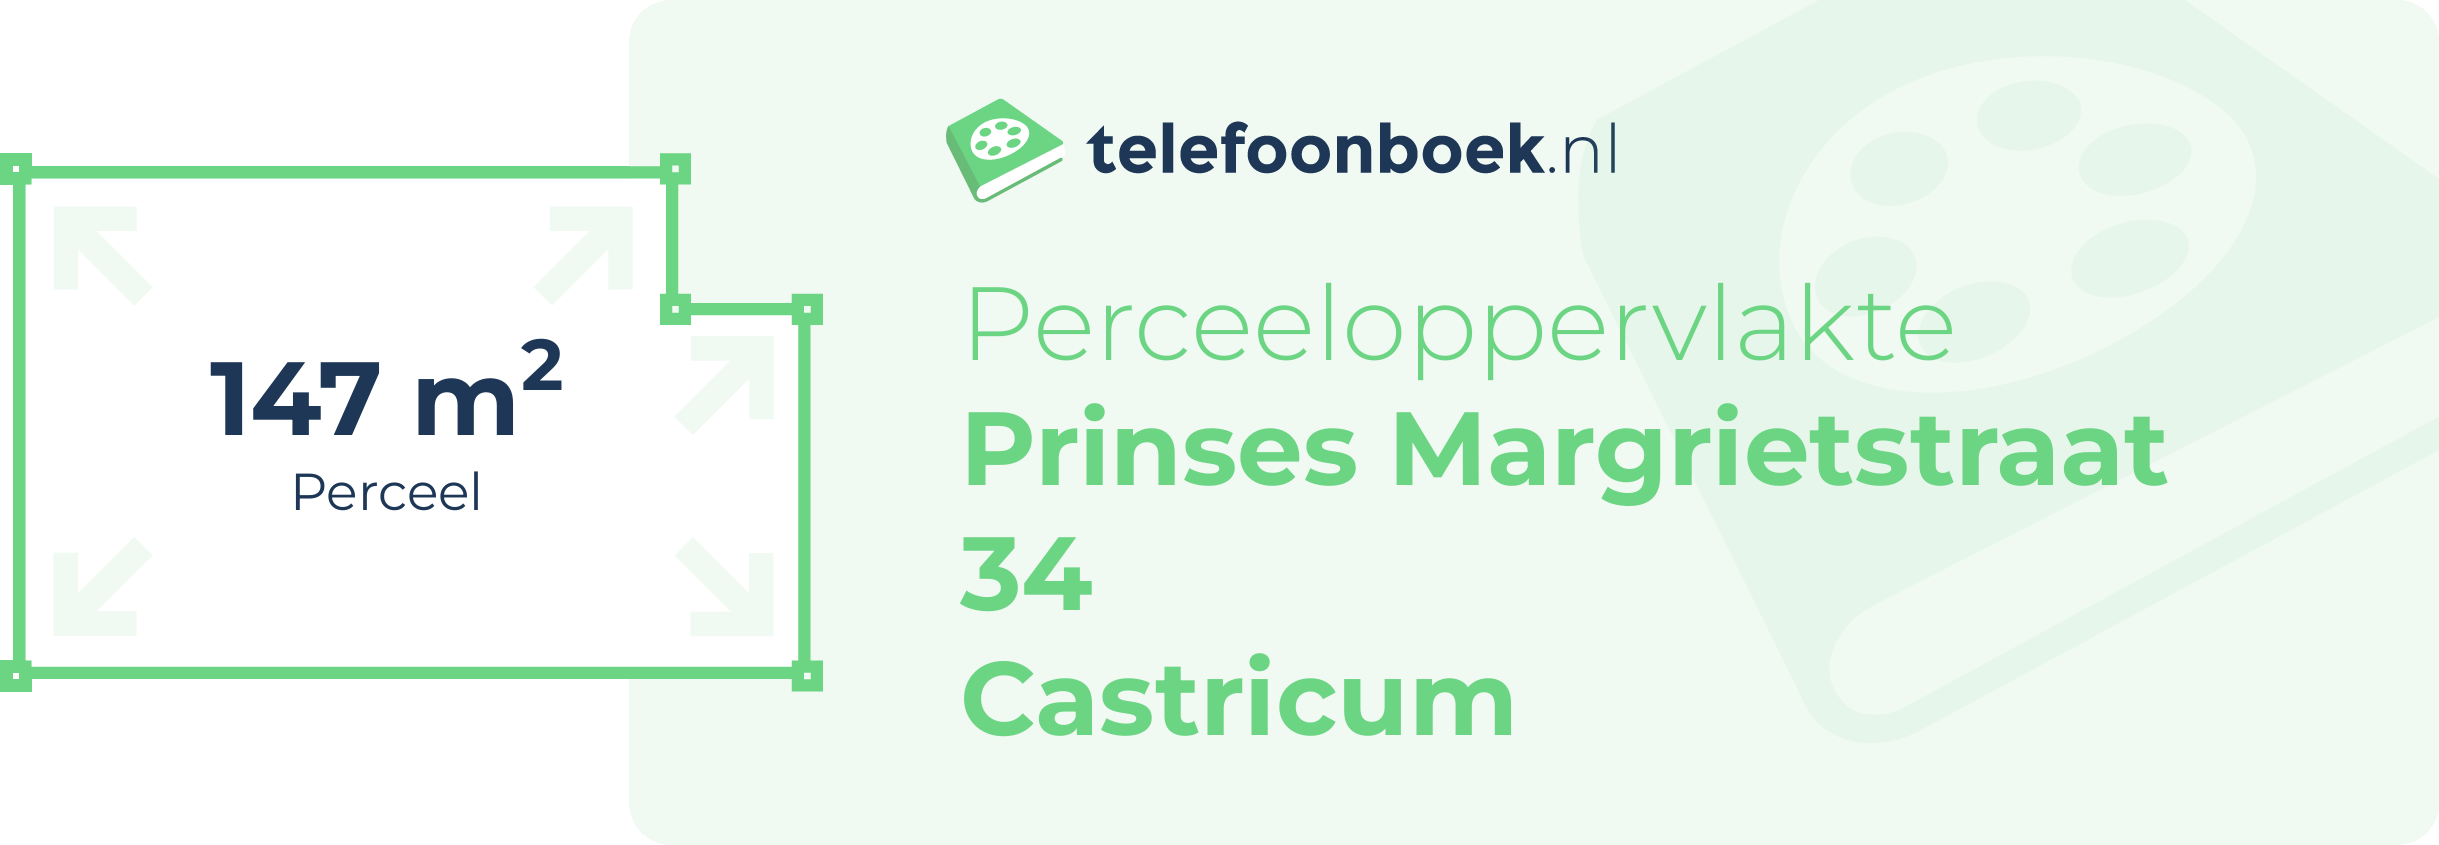 Perceeloppervlakte Prinses Margrietstraat 34 Castricum